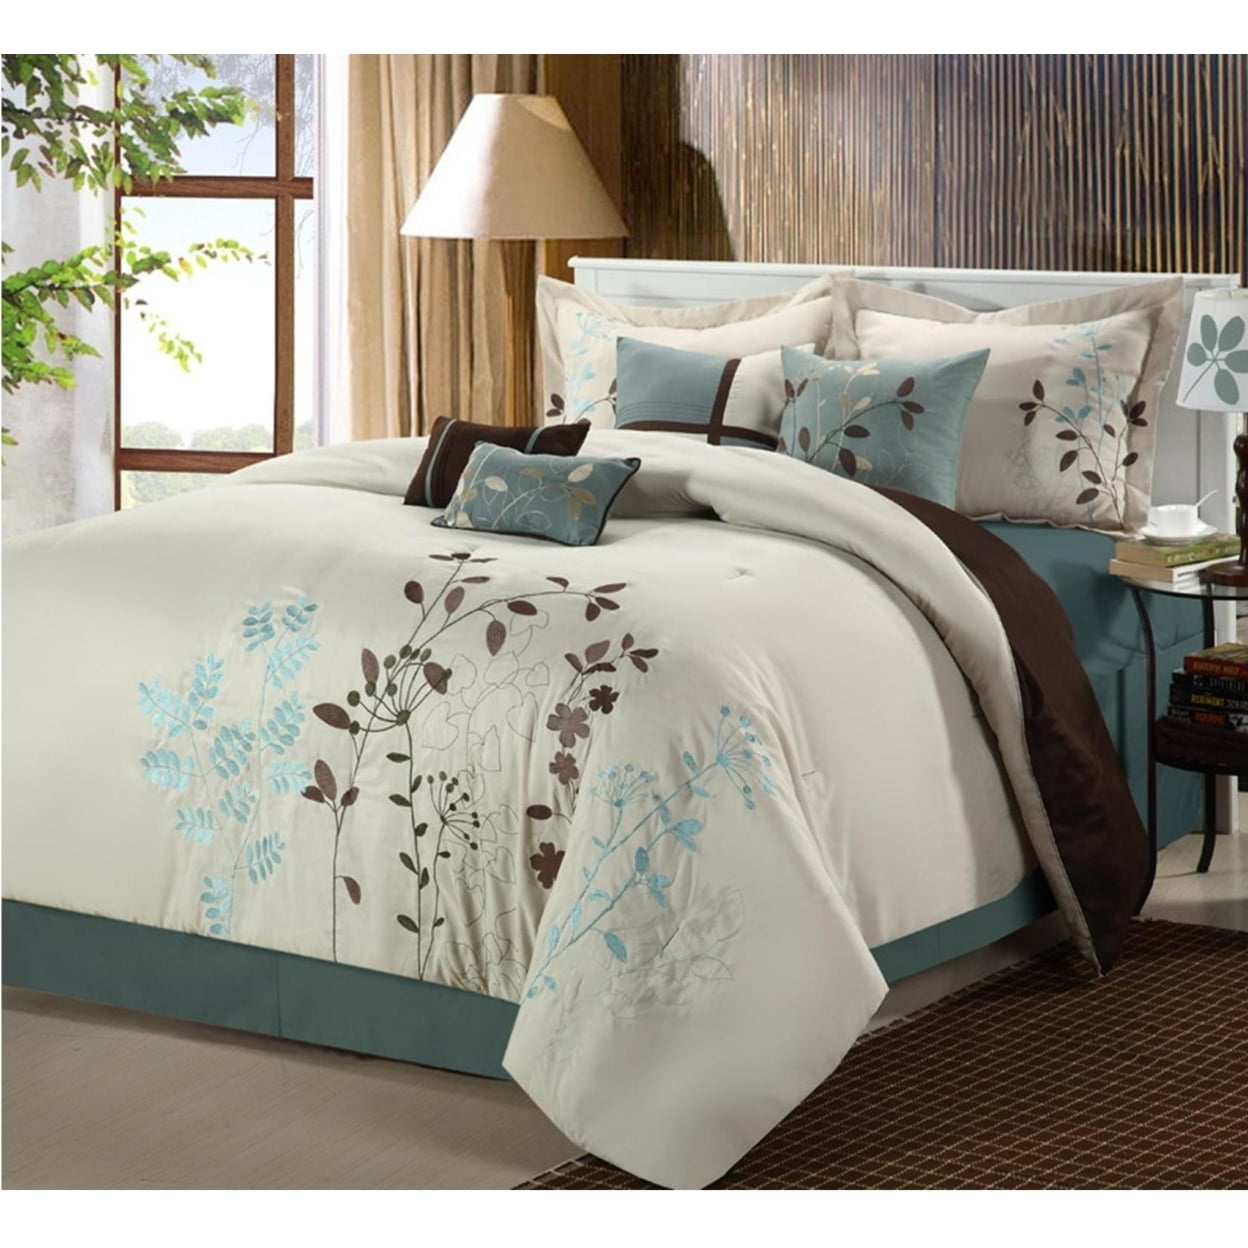 21cq101-us Bliss Garden Embroidered Comforter Set - Beige - Queen - 8 Piece